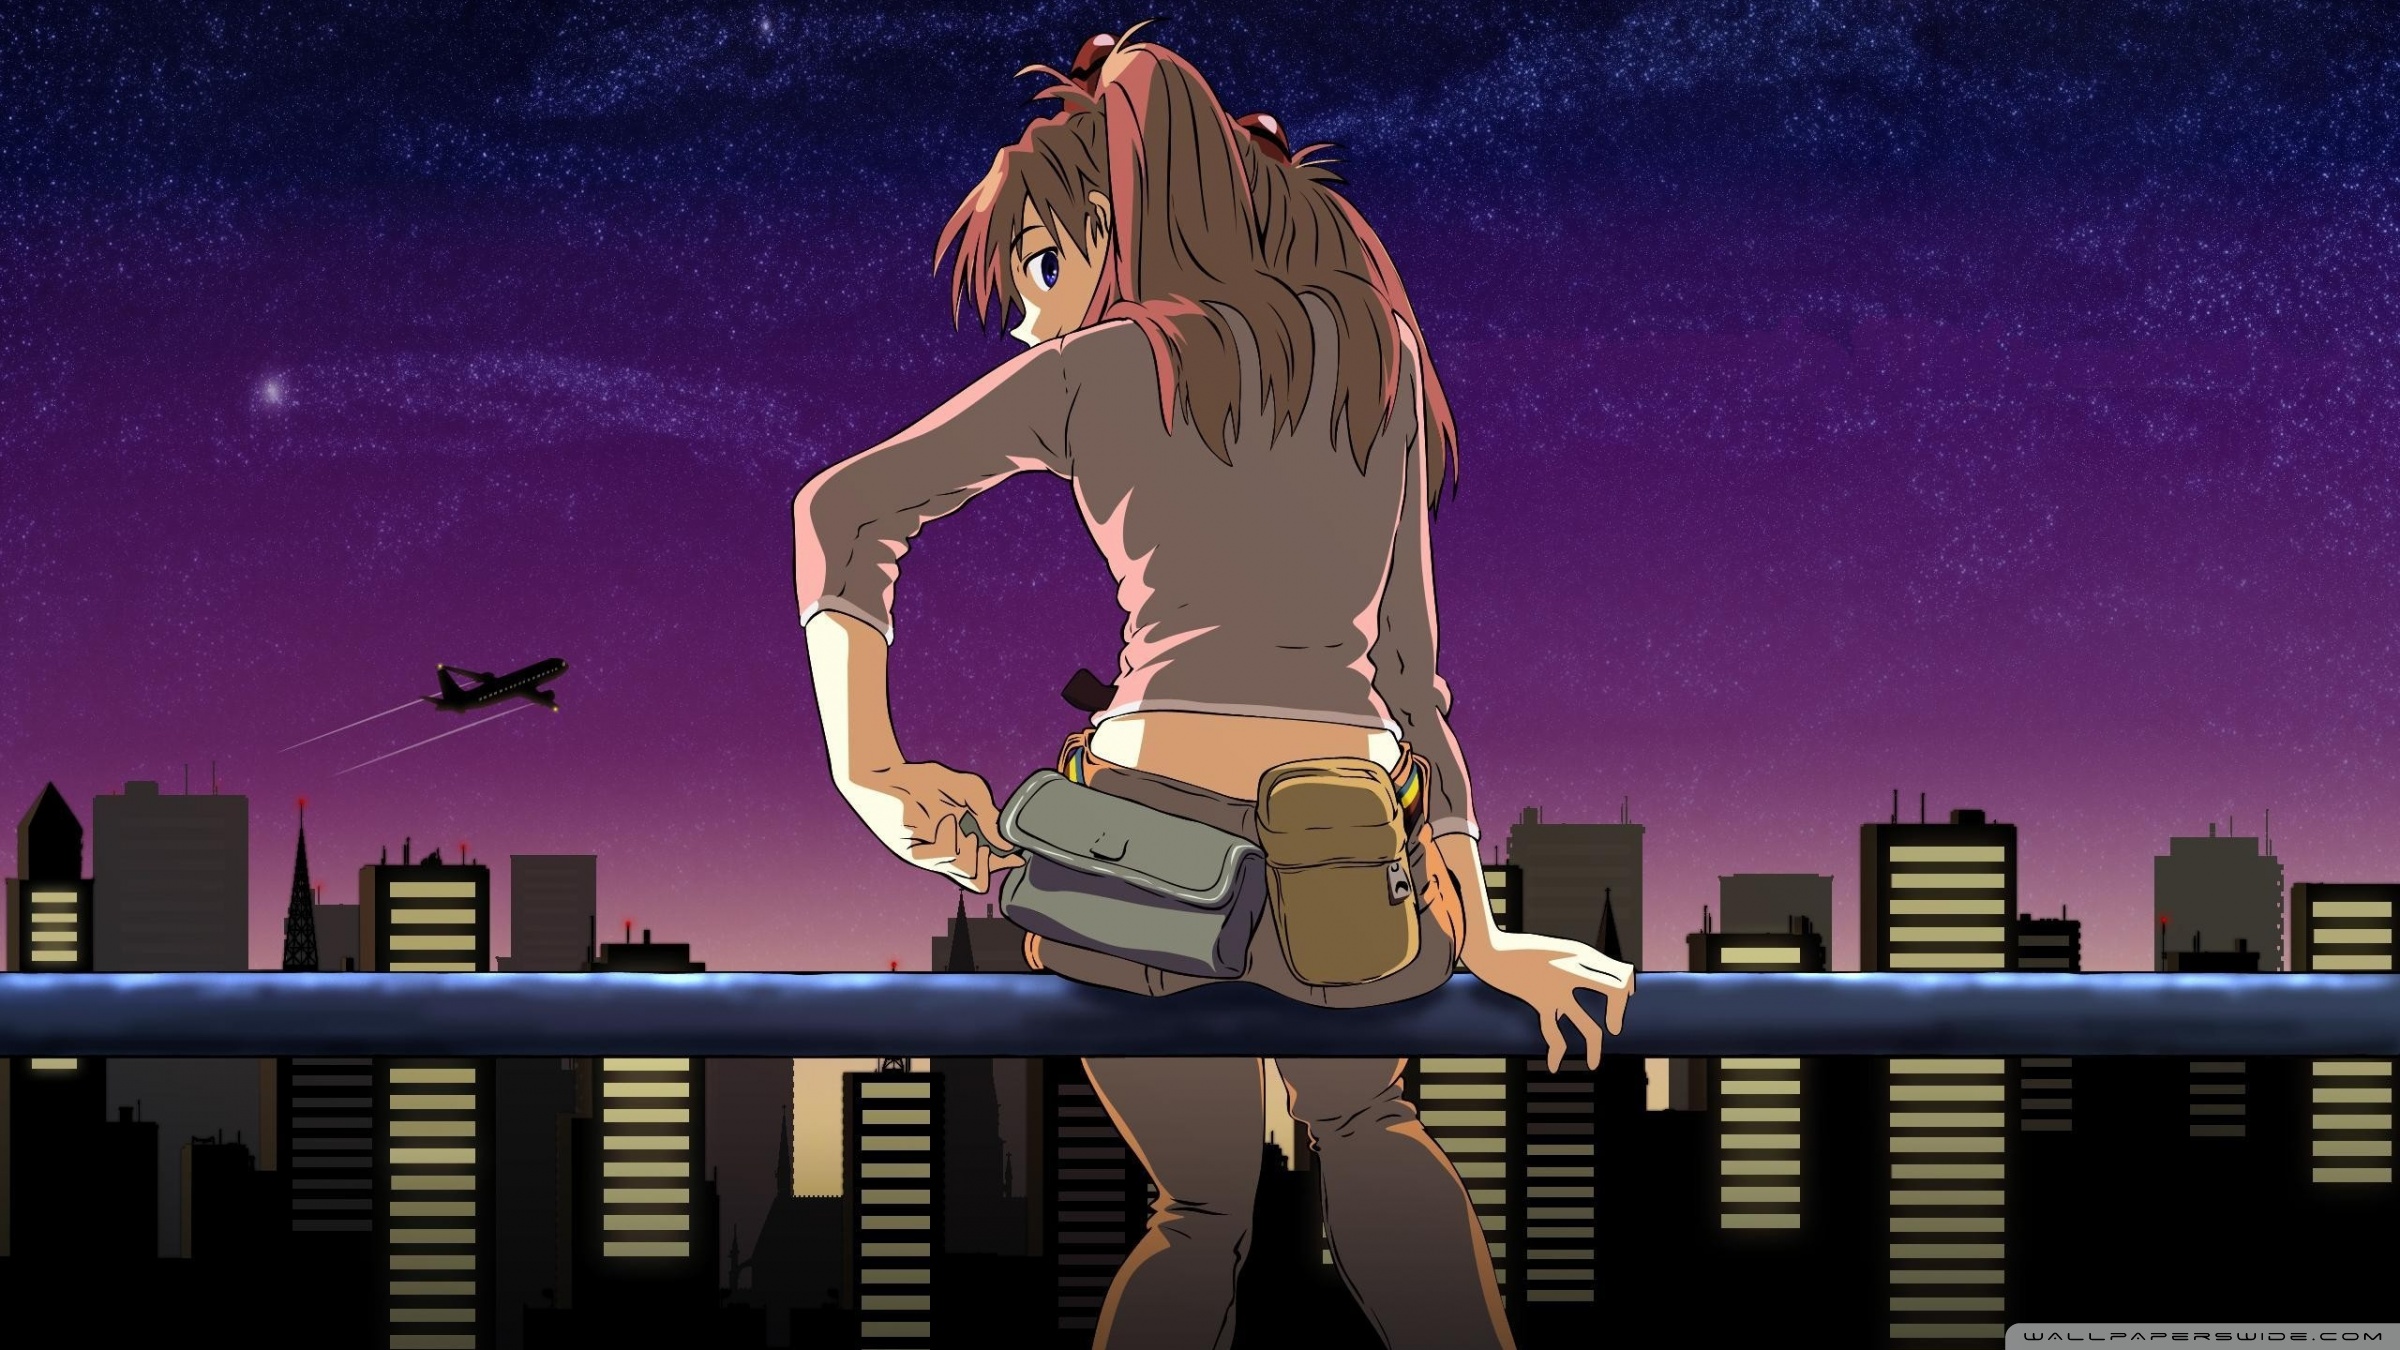 Widescreen 16:9 Ratio - Wallpaper - Zerochan Anime Image Board